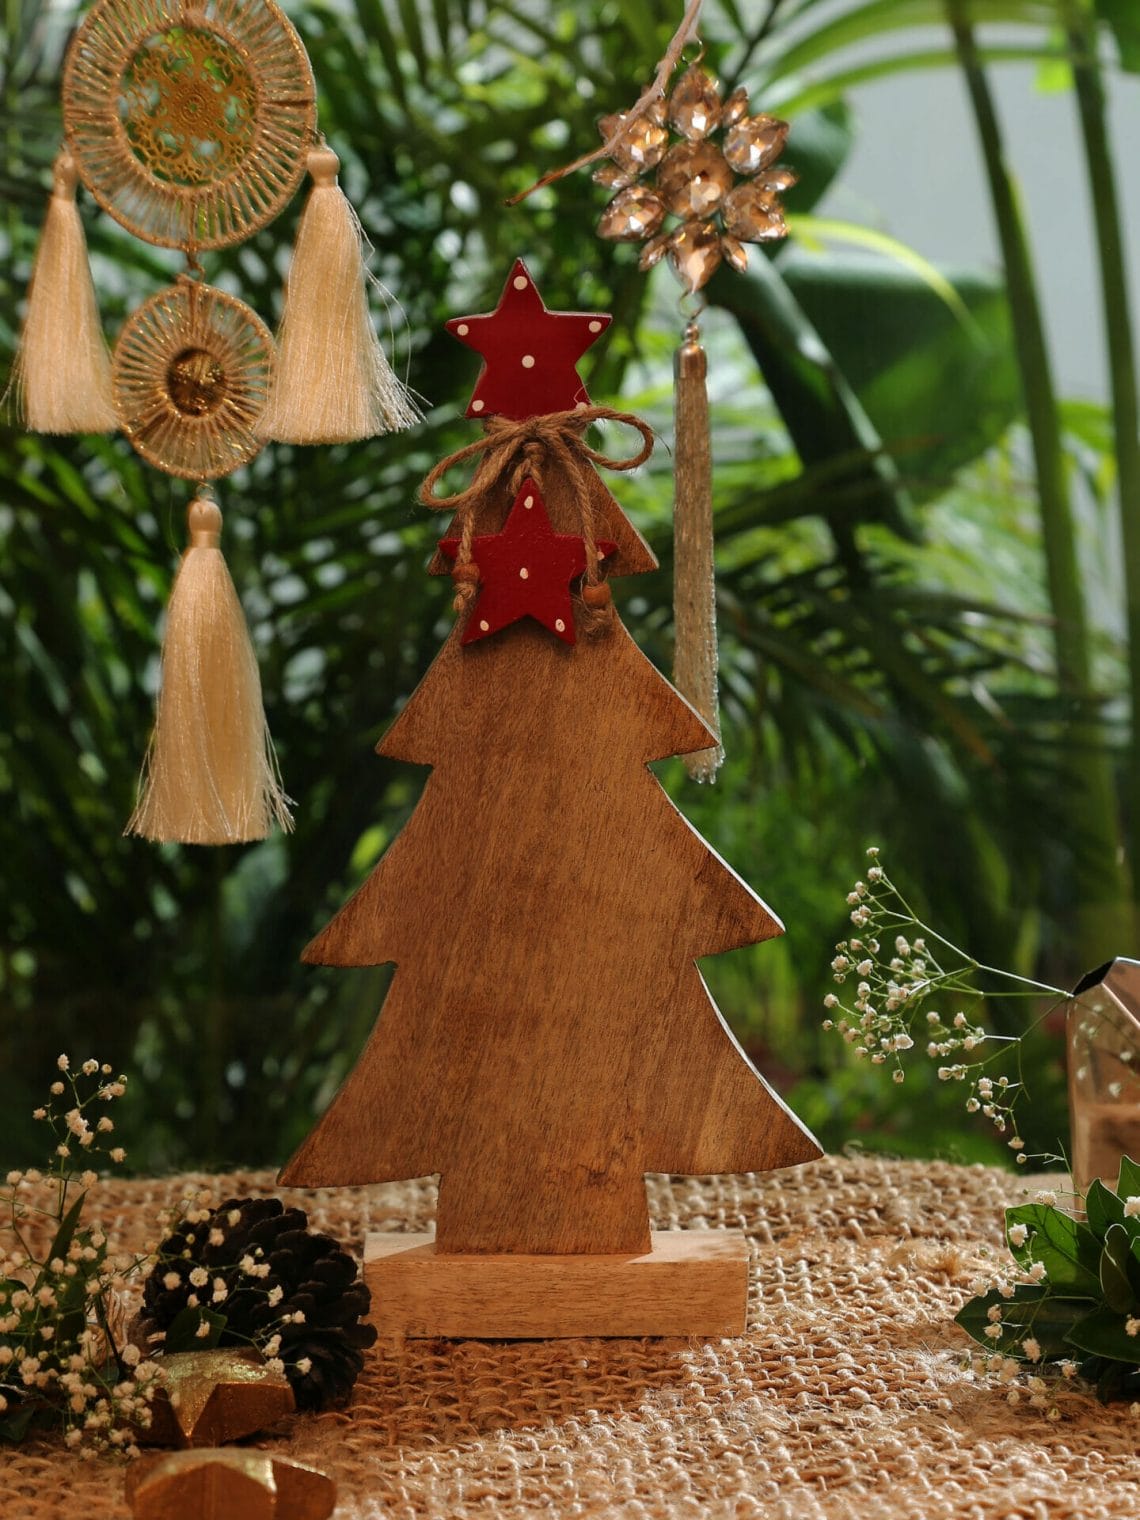 Christmas Decor essentials by Amoli Concepts